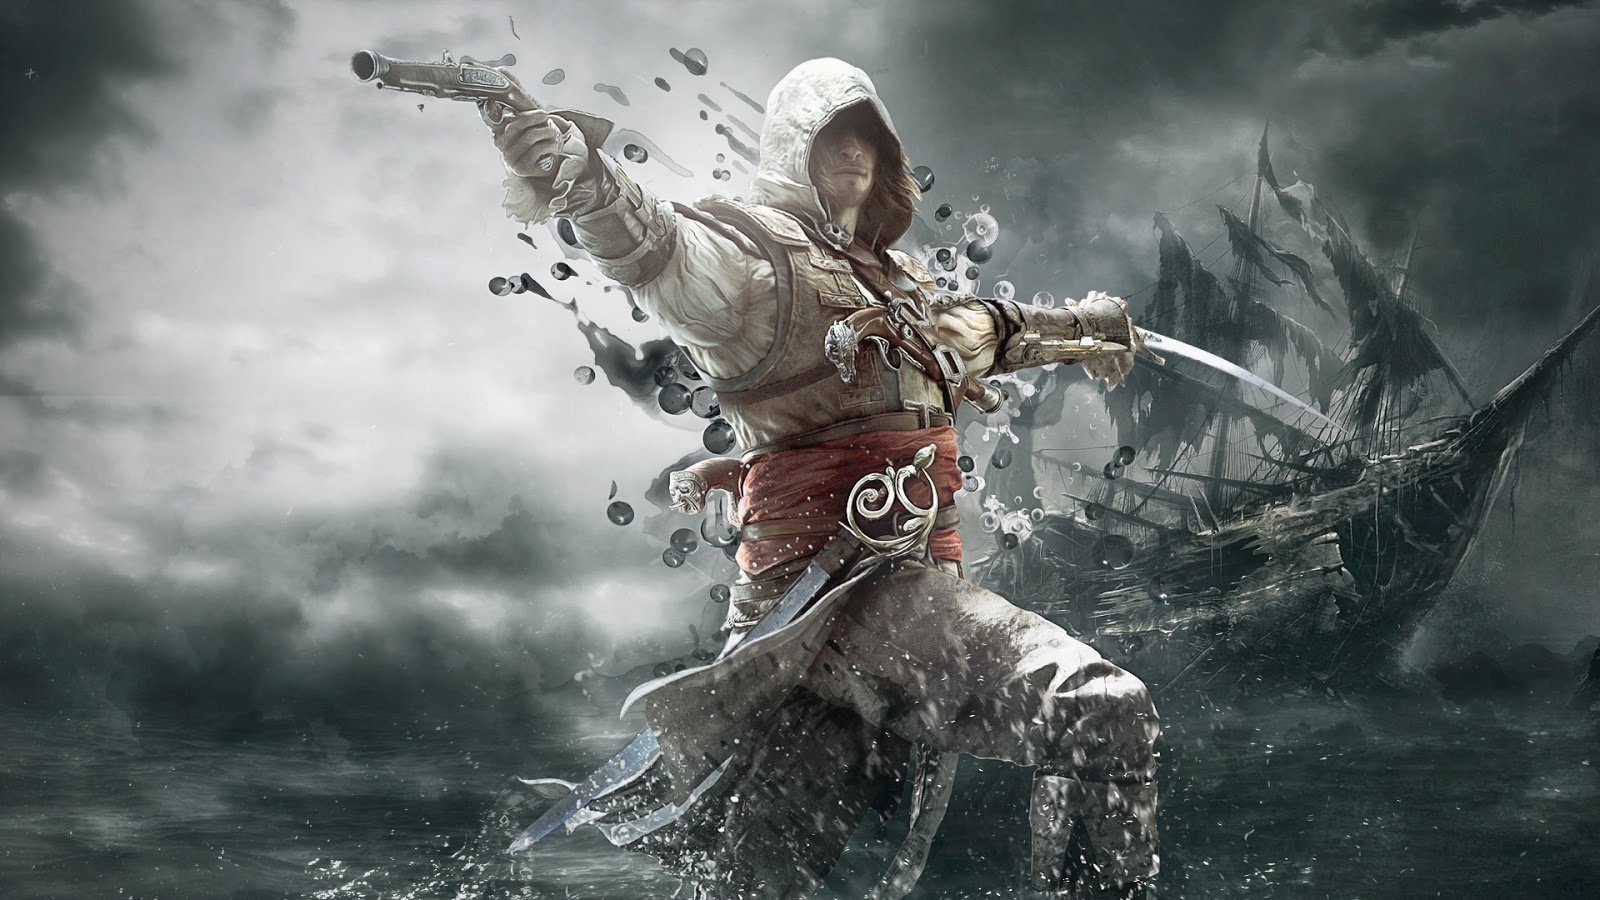 Assassin’s Creed IV Black Flag (2013) wallpaper